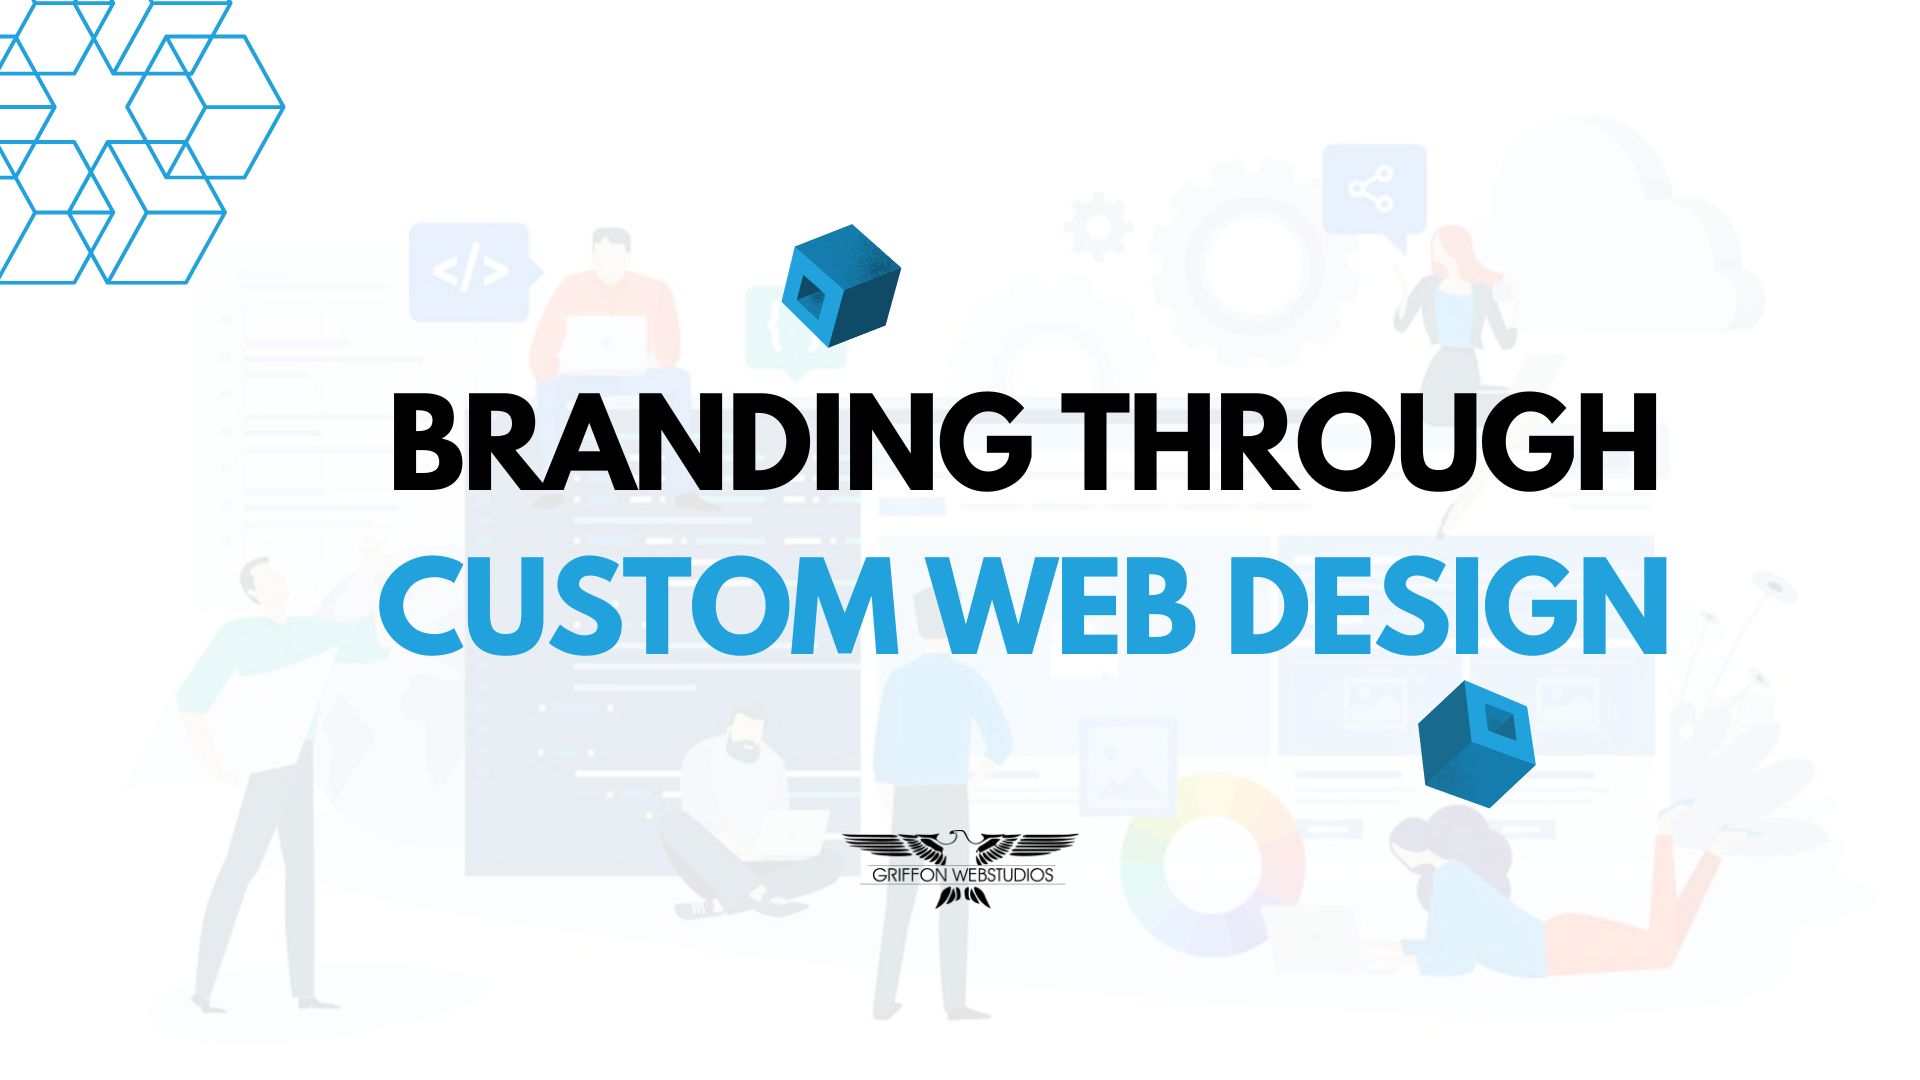 Branding Through Custom Web Design Services